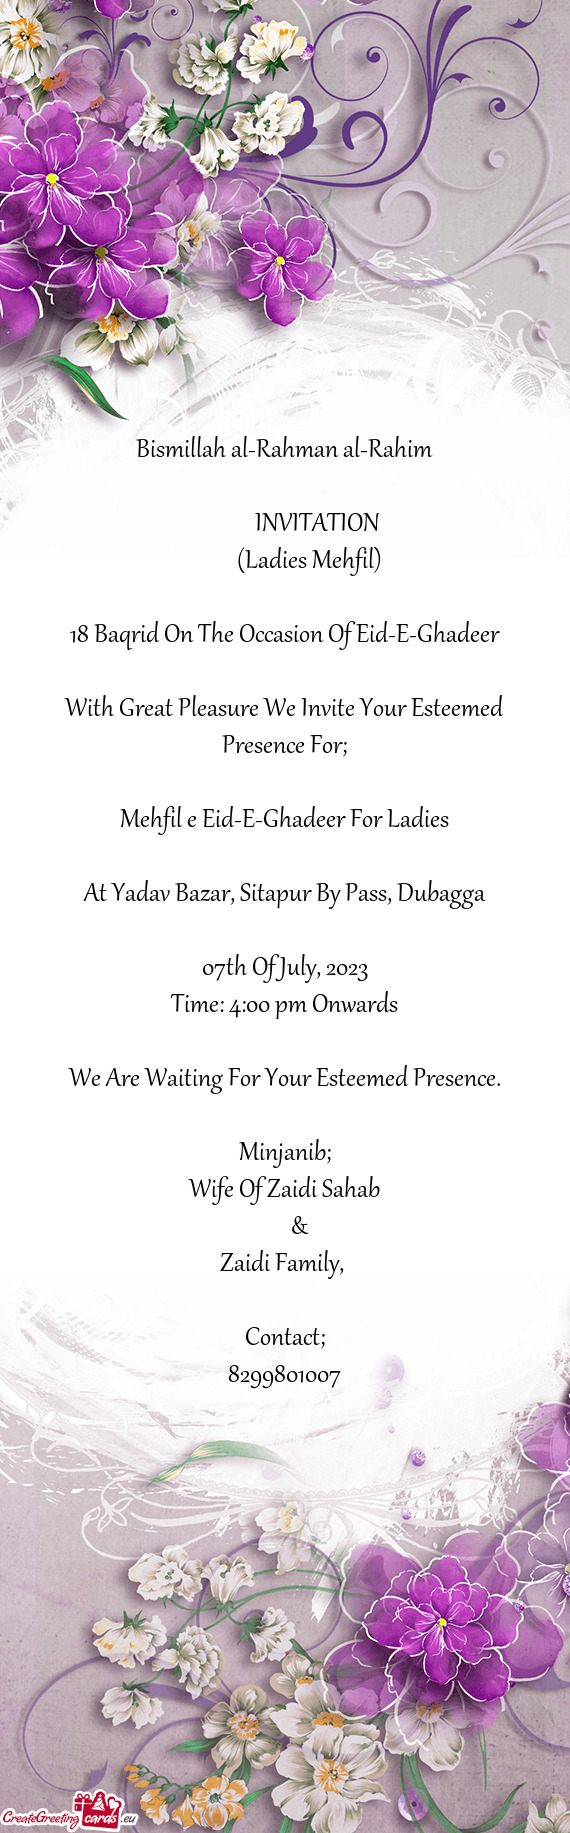 Mehfil e Eid-E-Ghadeer For Ladies